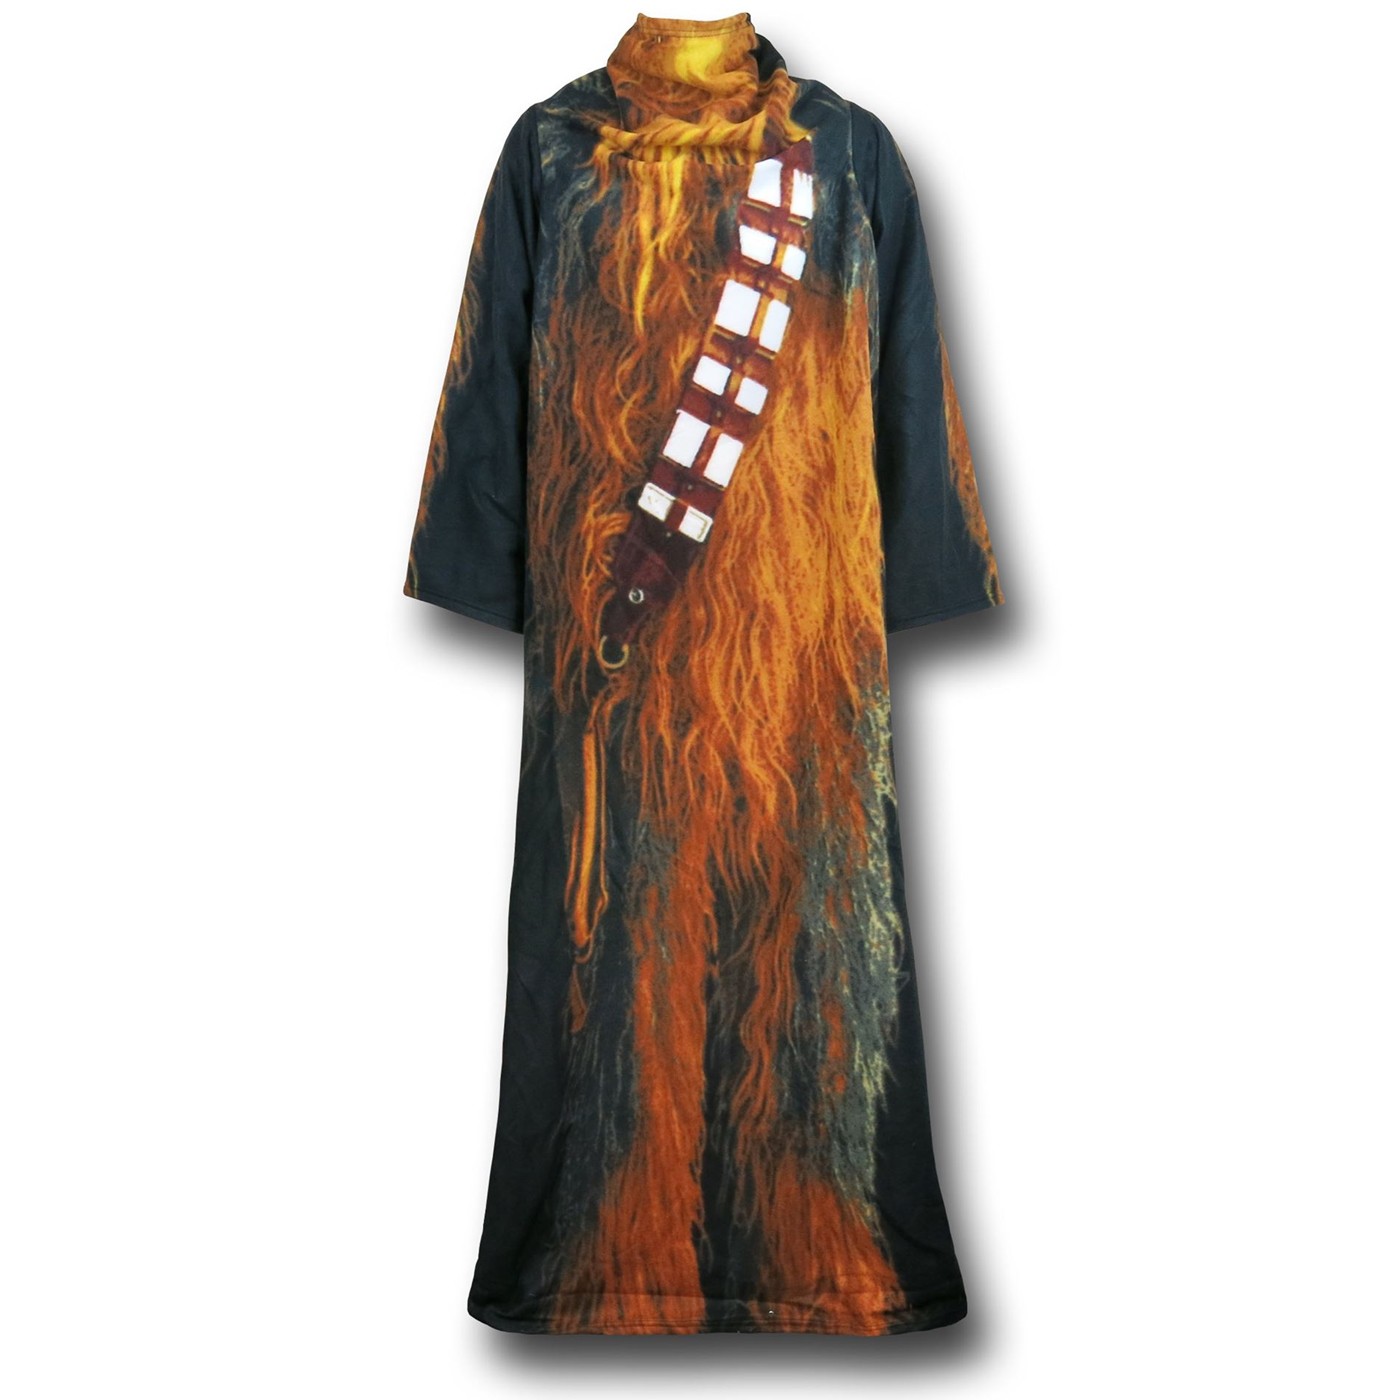 Star Wars Chewbacca Costume Snuggy Sleeved Blanket